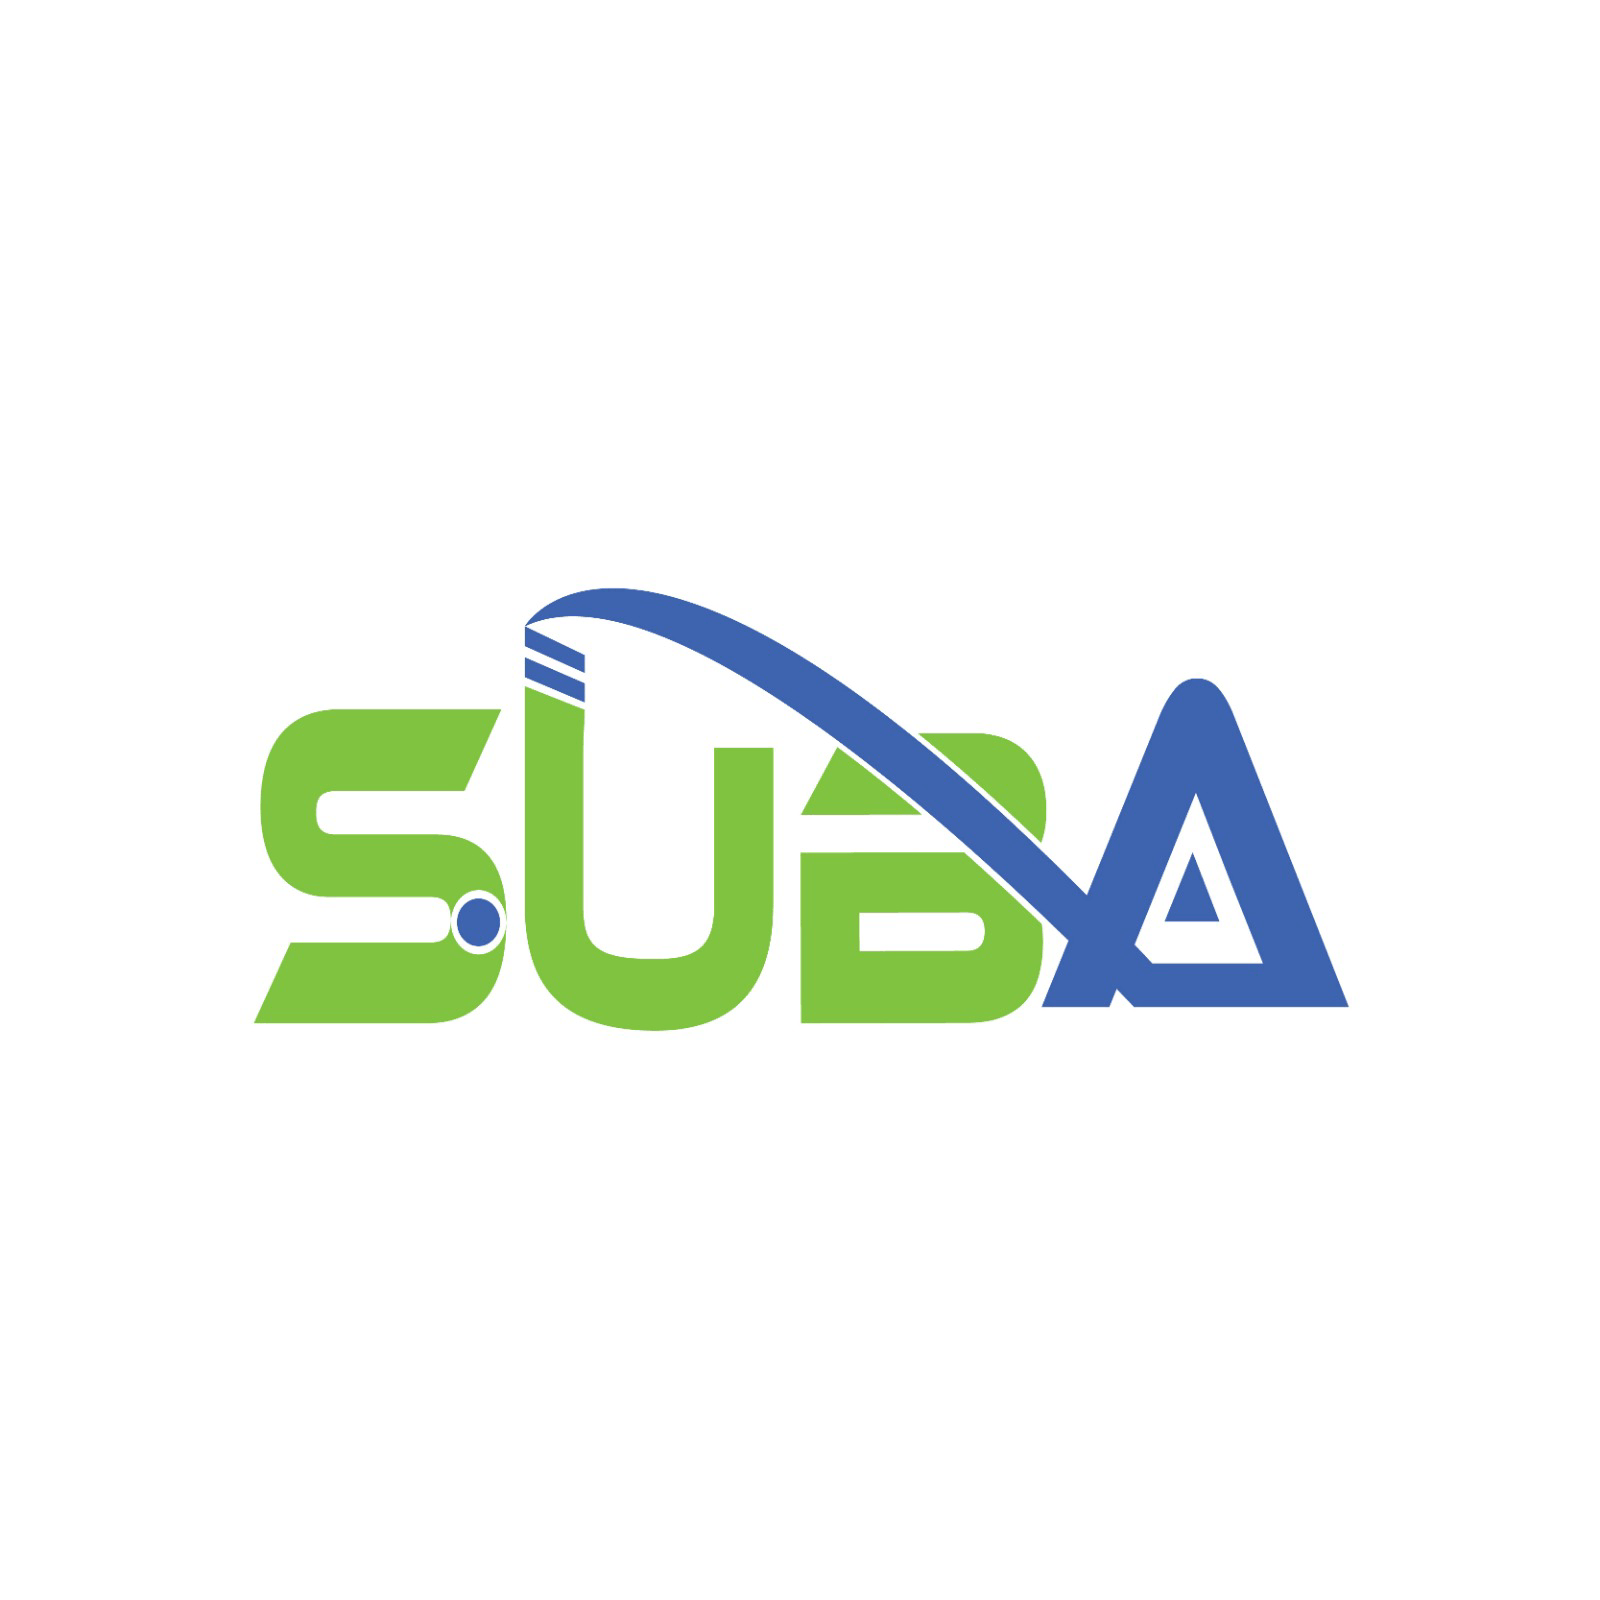 Suba Logo - Suba Limited Reviews. Read Customer Service Reviews of subaltd.com